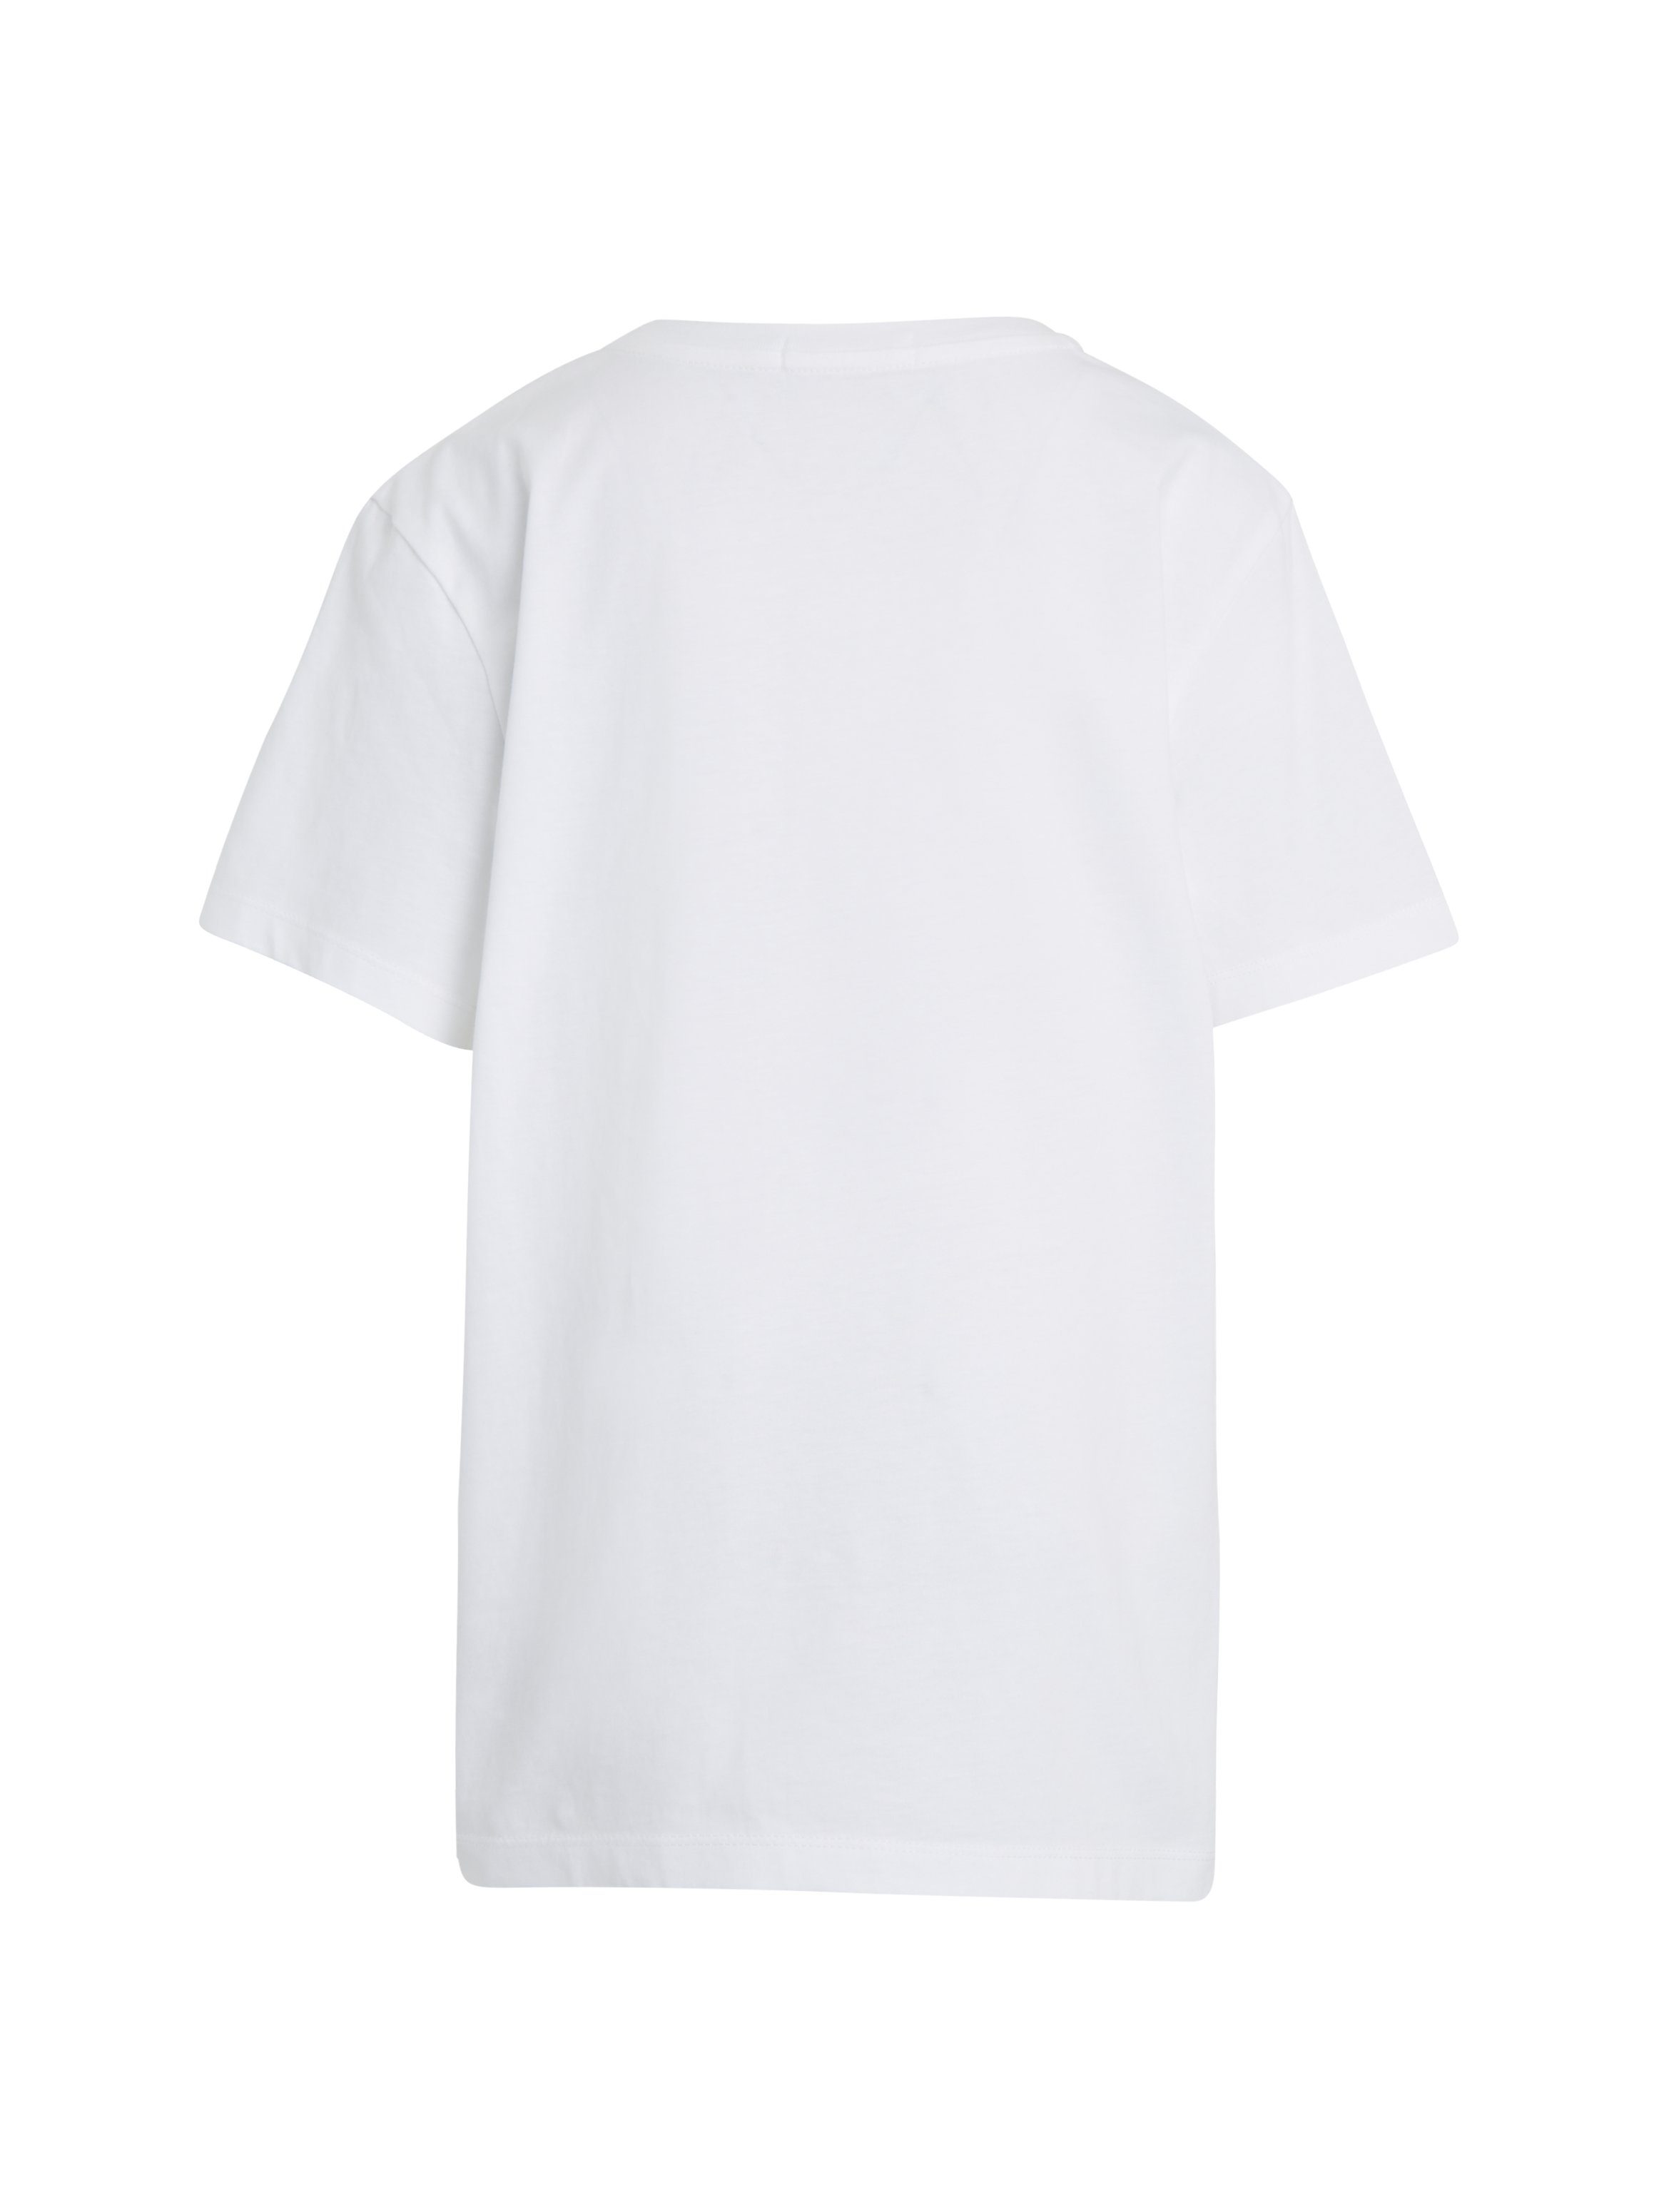 Calvin Klein Jeans MONOGRAM Bright White T-Shirt CHEST TOP